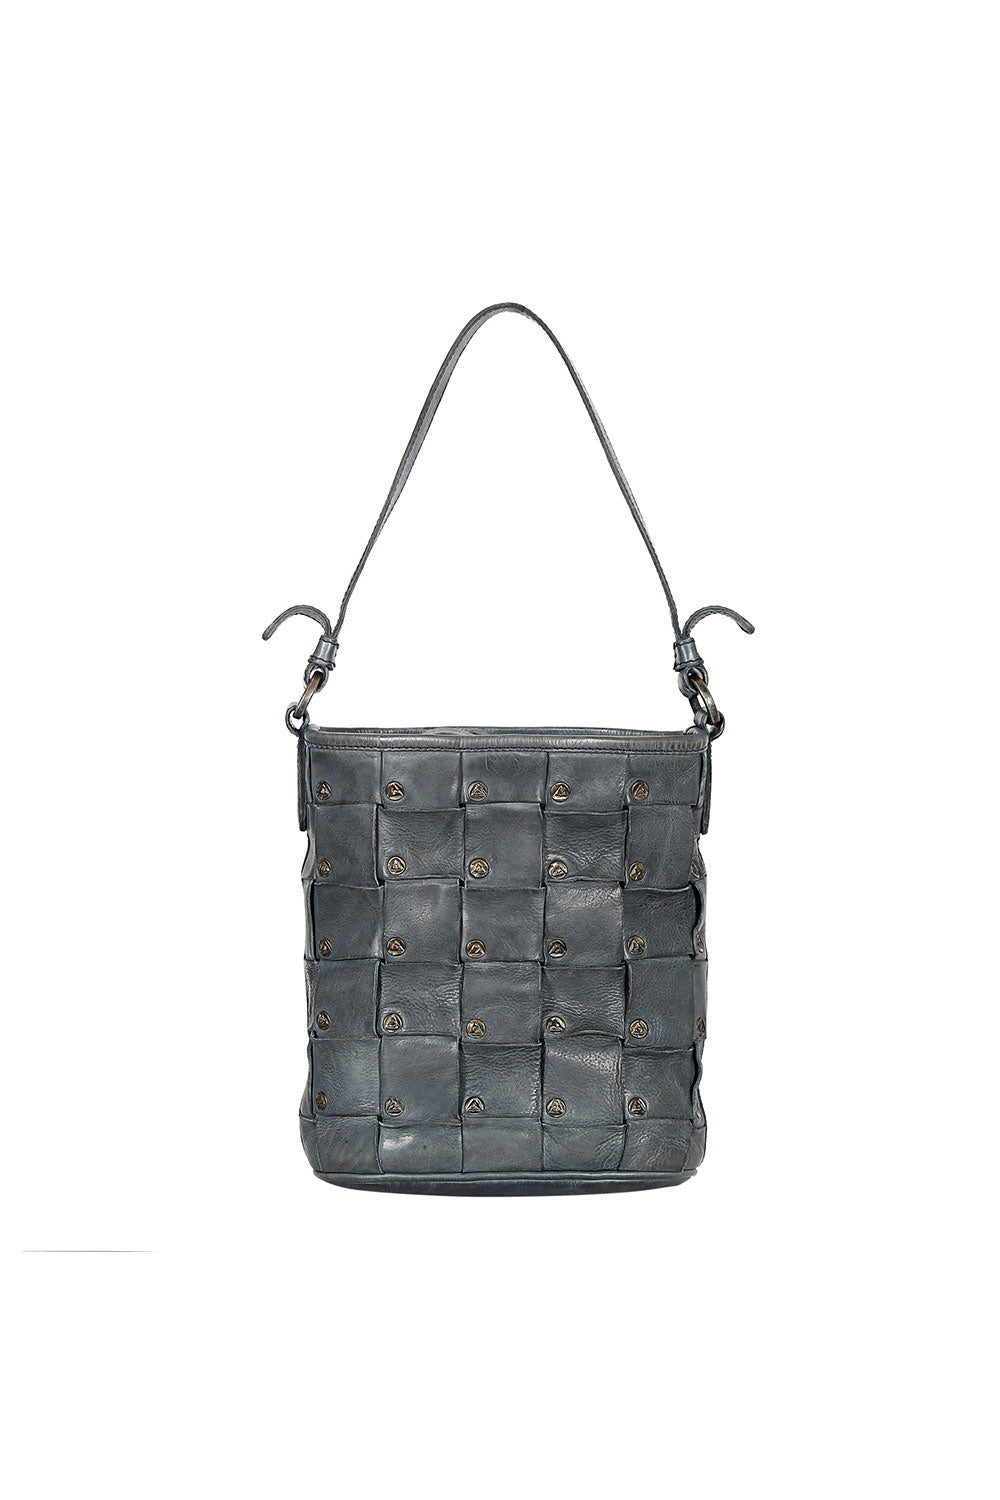 Mila Louise Paris Grey Handbag  Gray handbags, Paris grey, Handbag